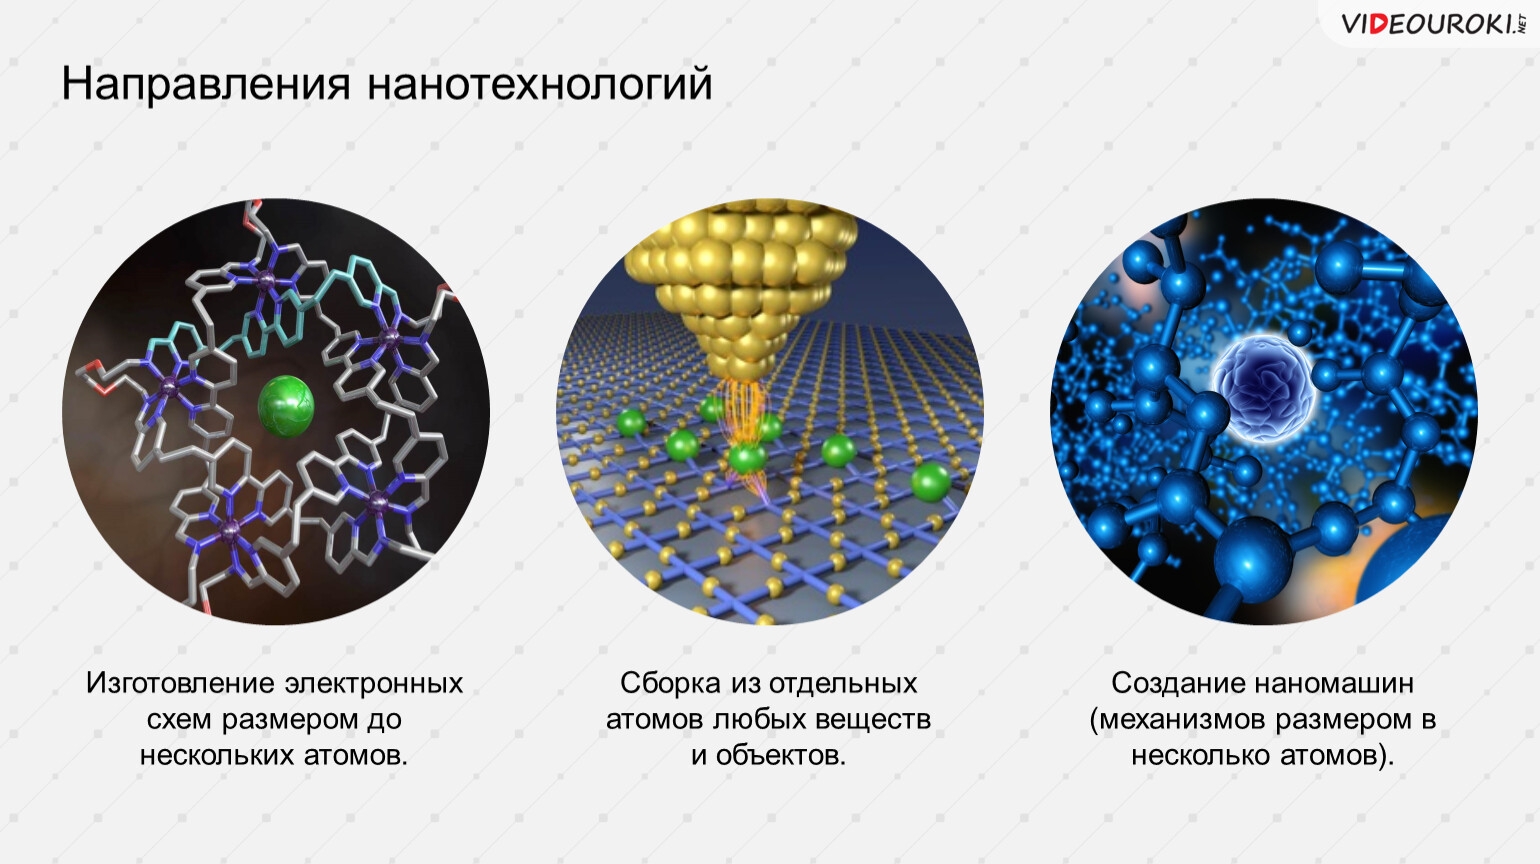 Сферы нанотехнологий. Направления нанотехнологий. Нанотехнологии схема. Нанотехнологии презентация. Основные направления нанотехнологии.